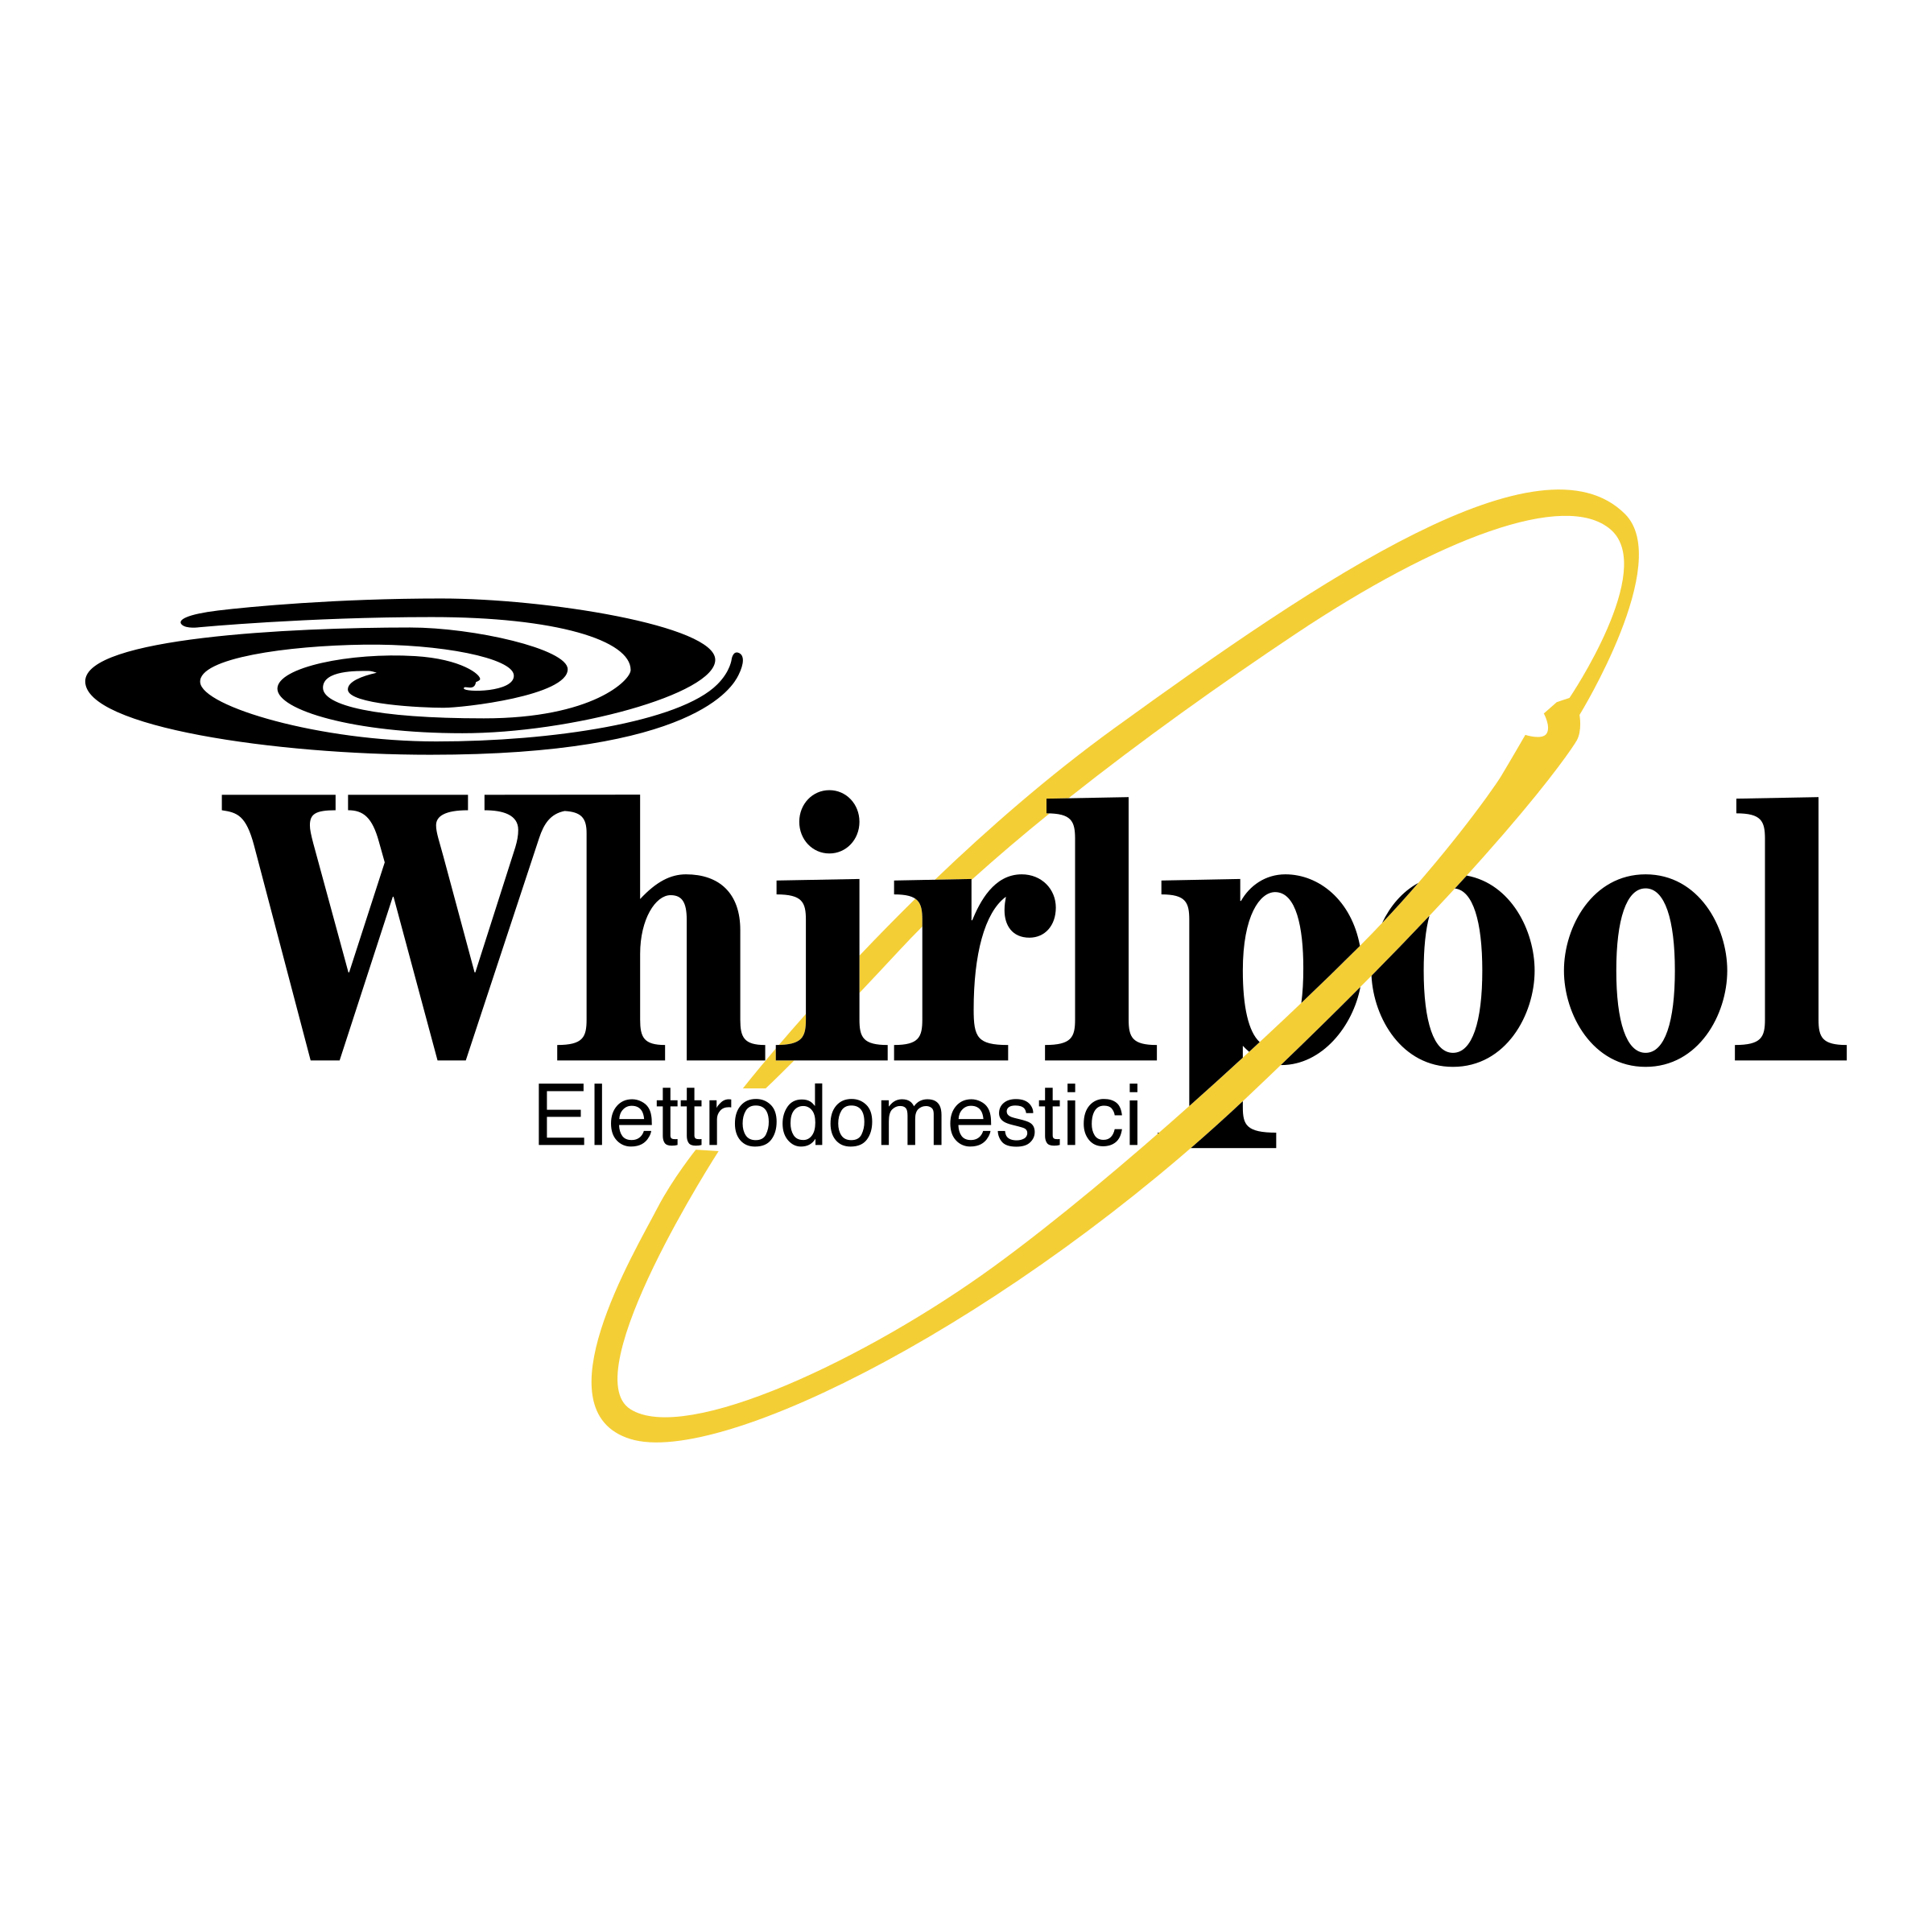 Whirpool Logo - Whirlpool Logo PNG Transparent & SVG Vector